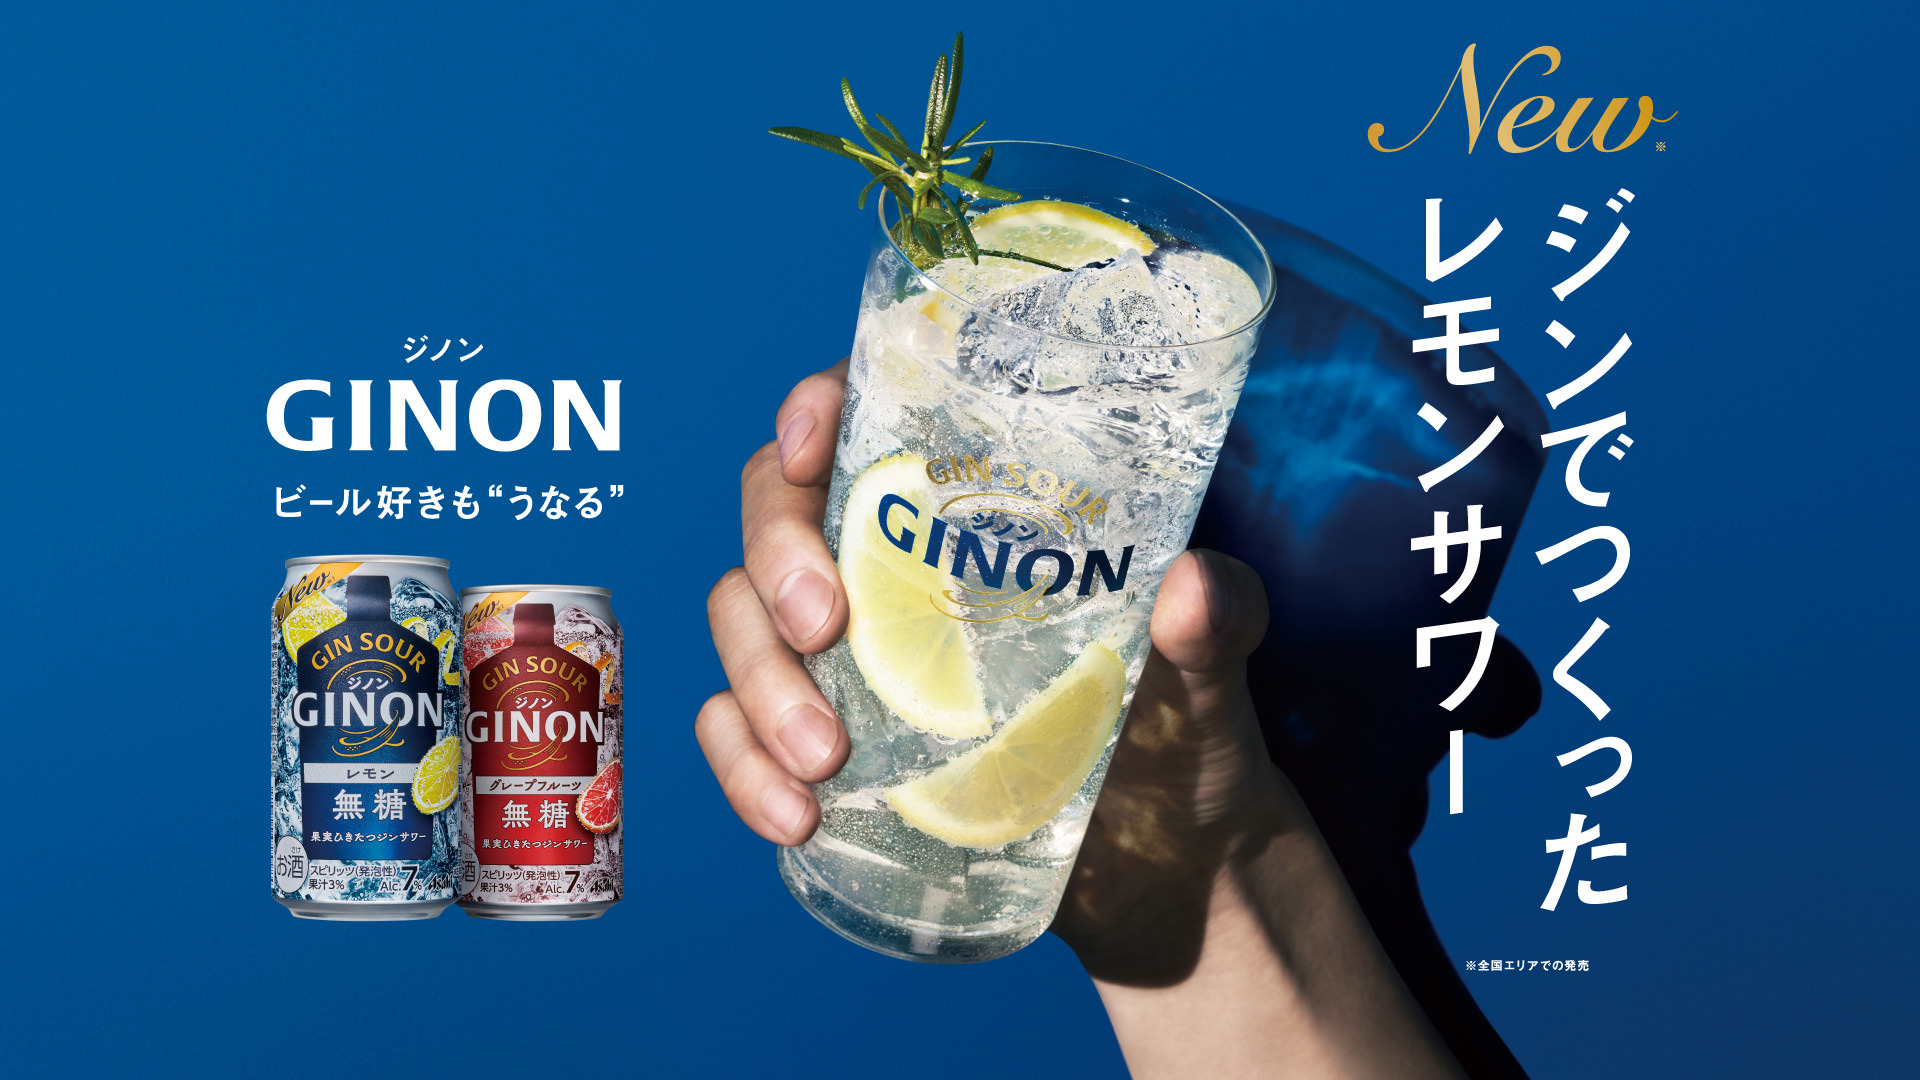 Wm GINON r[DgȂh New WōT[ SGAł̔